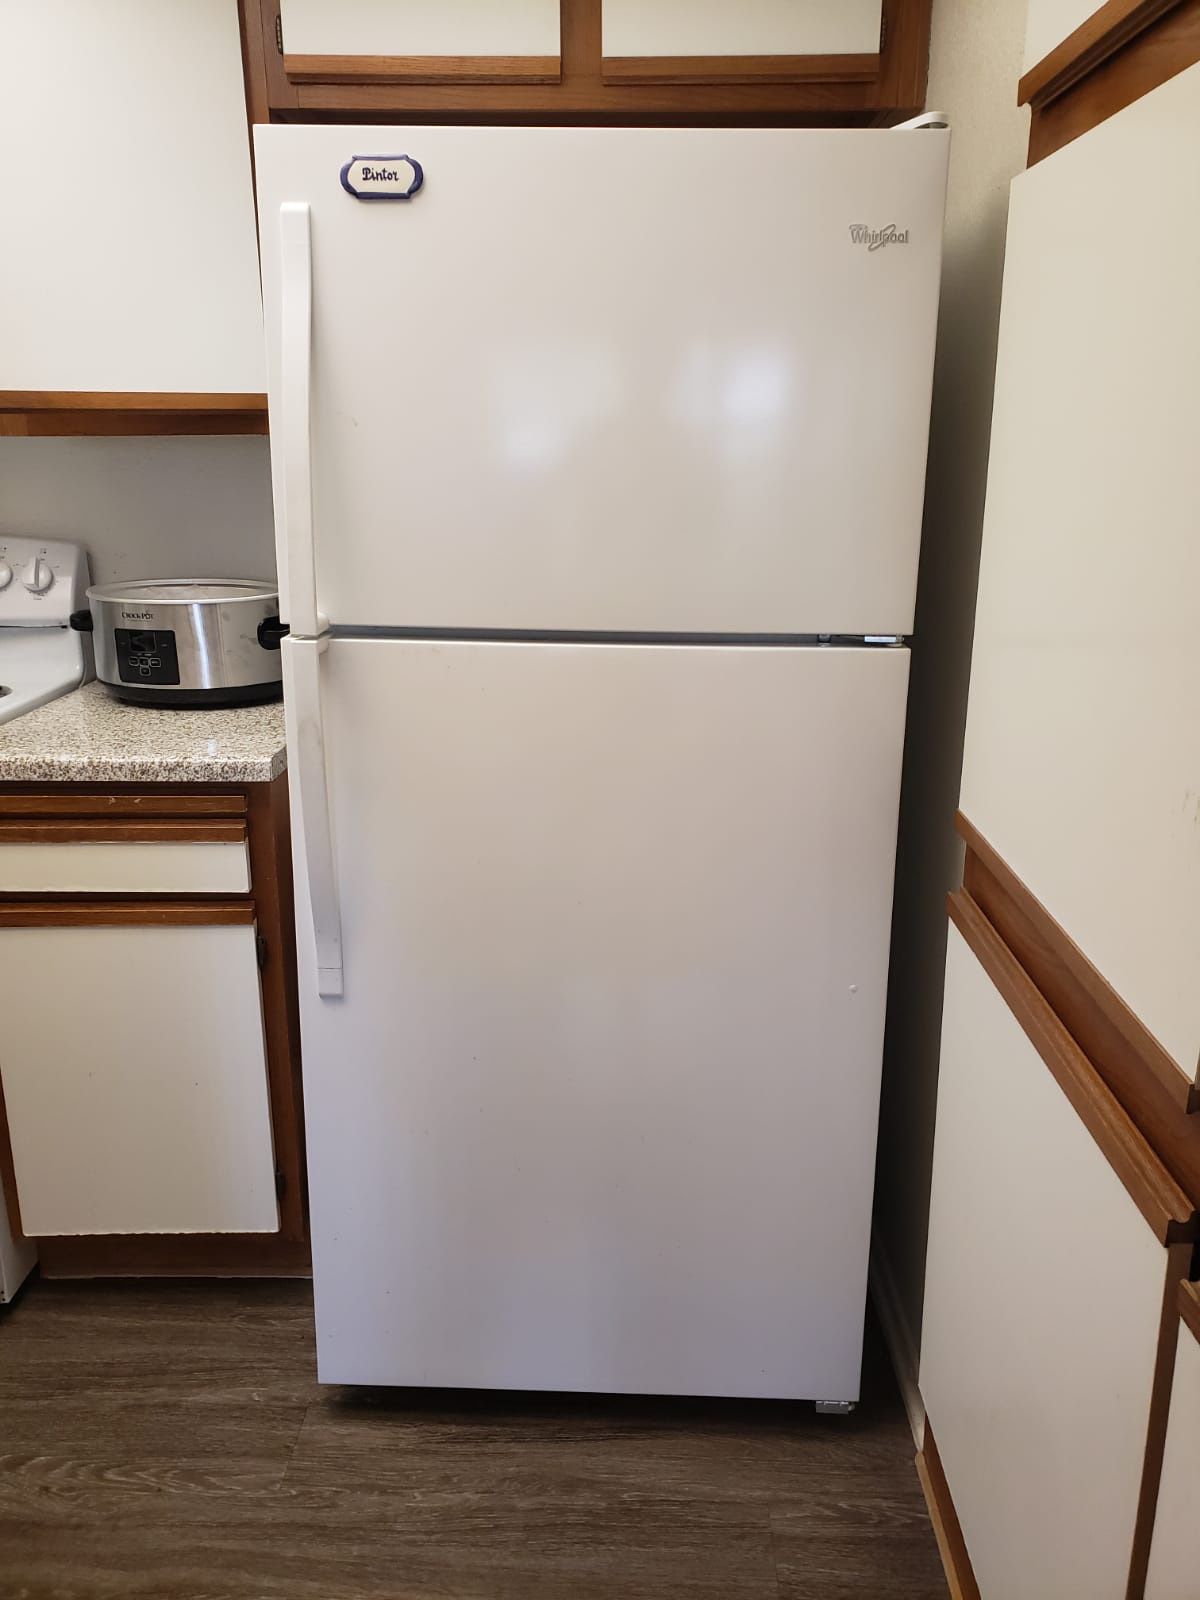 New Refrigerator perfect condition